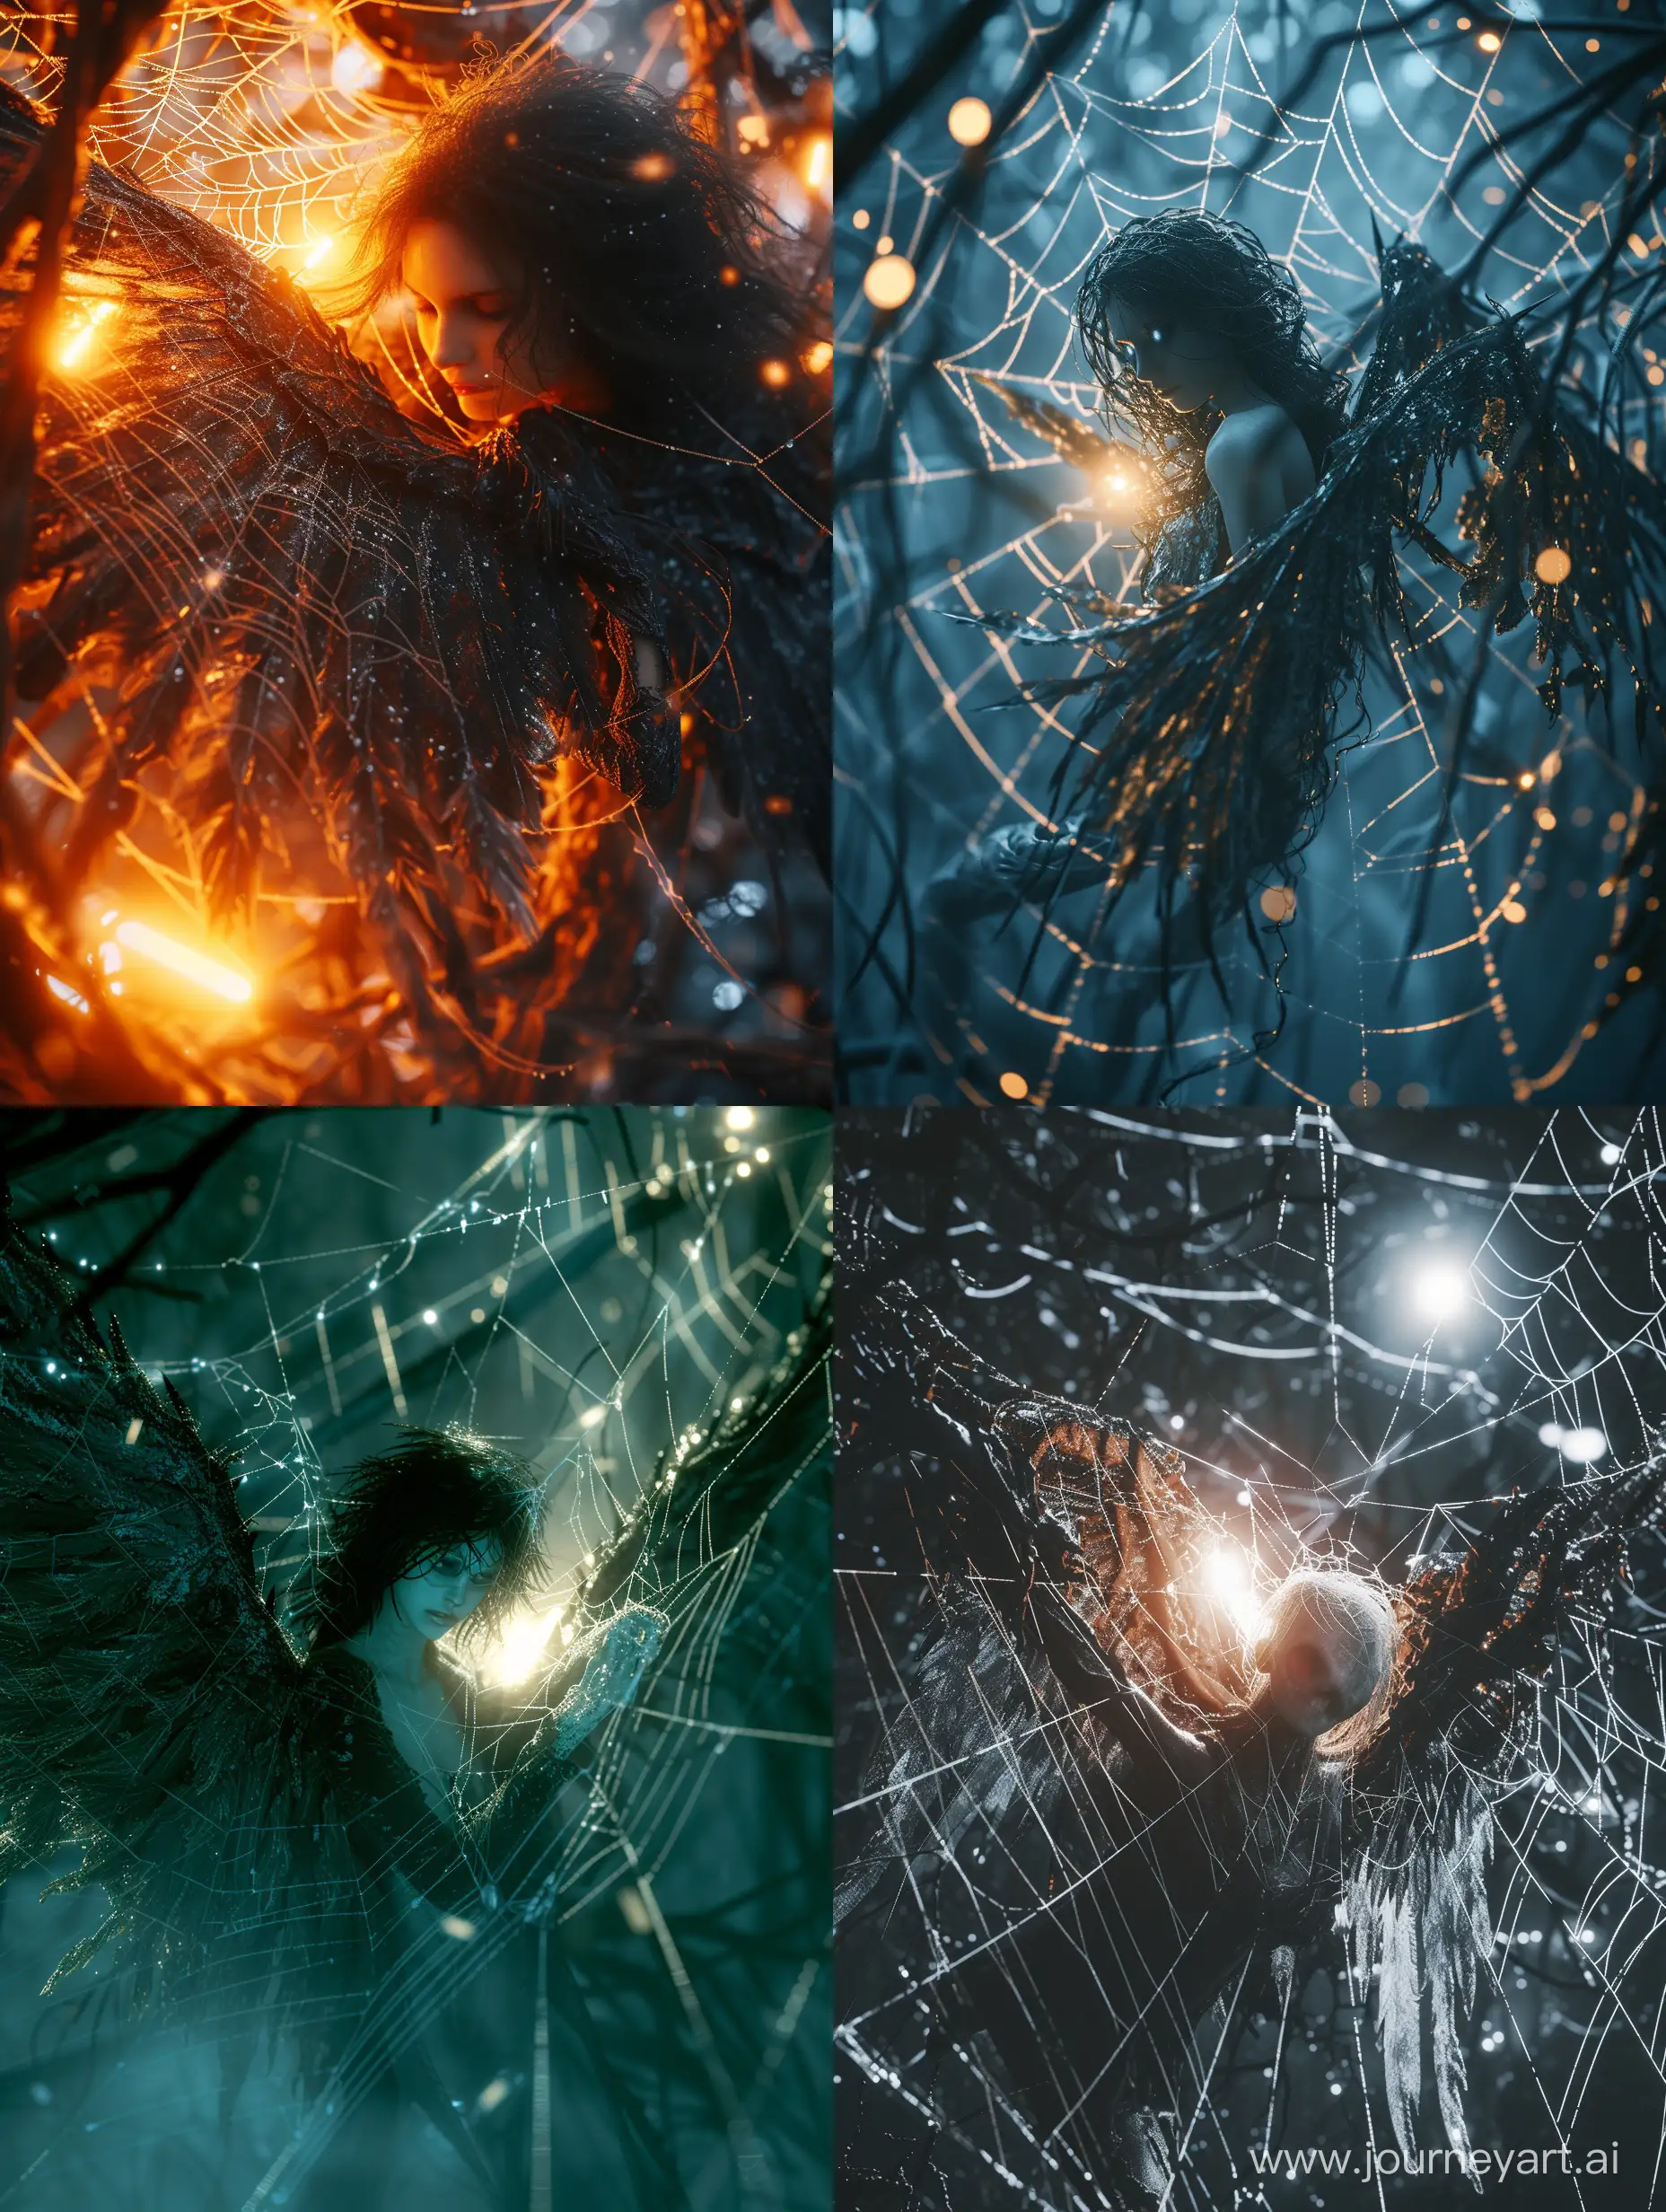 Dark-Fantasy-Illustration-Luminous-Demonic-Winged-Woman-Ensnared-in-Spiderweb